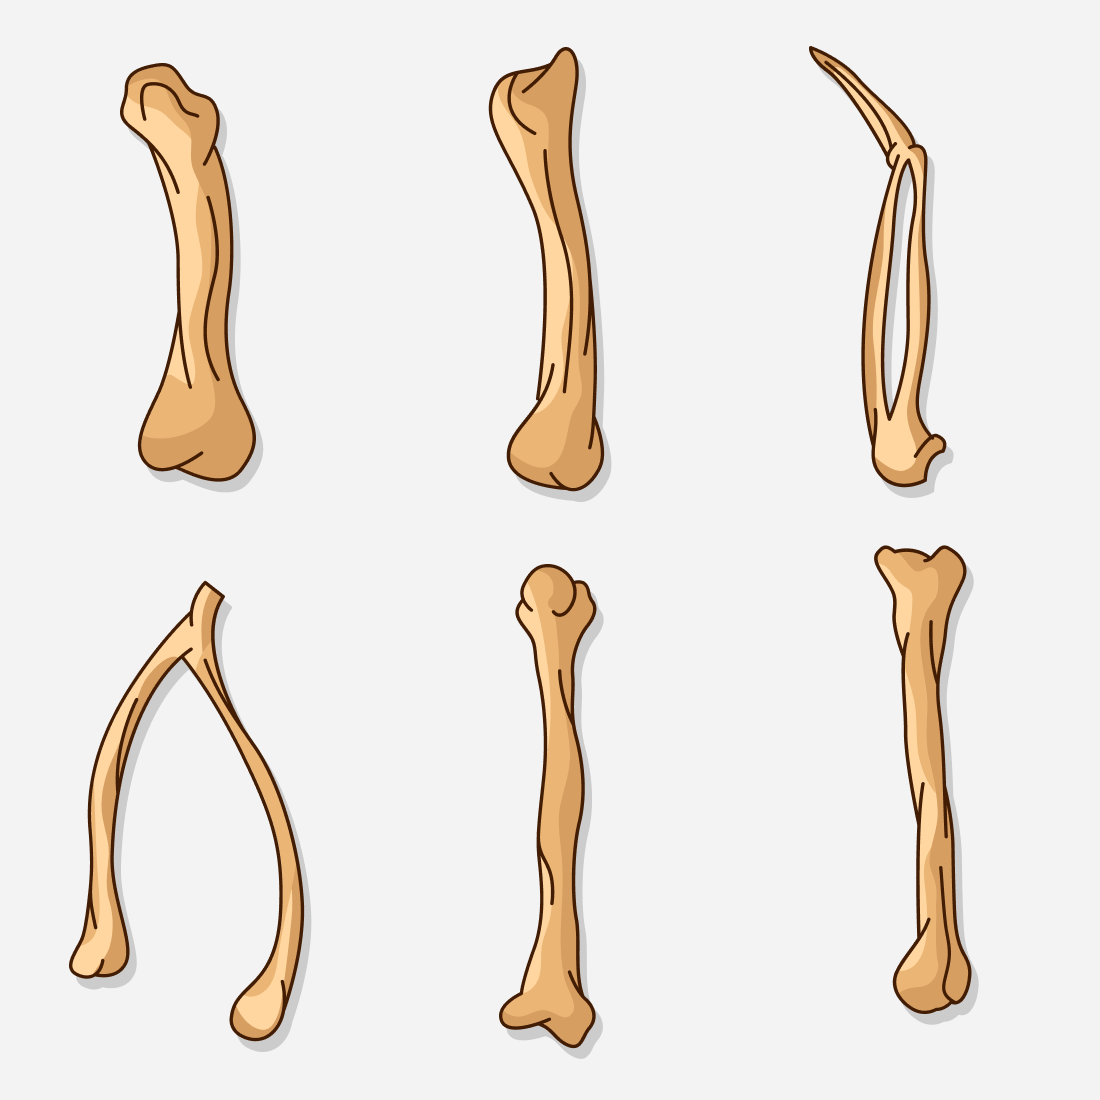 Beige bones of different sizes.